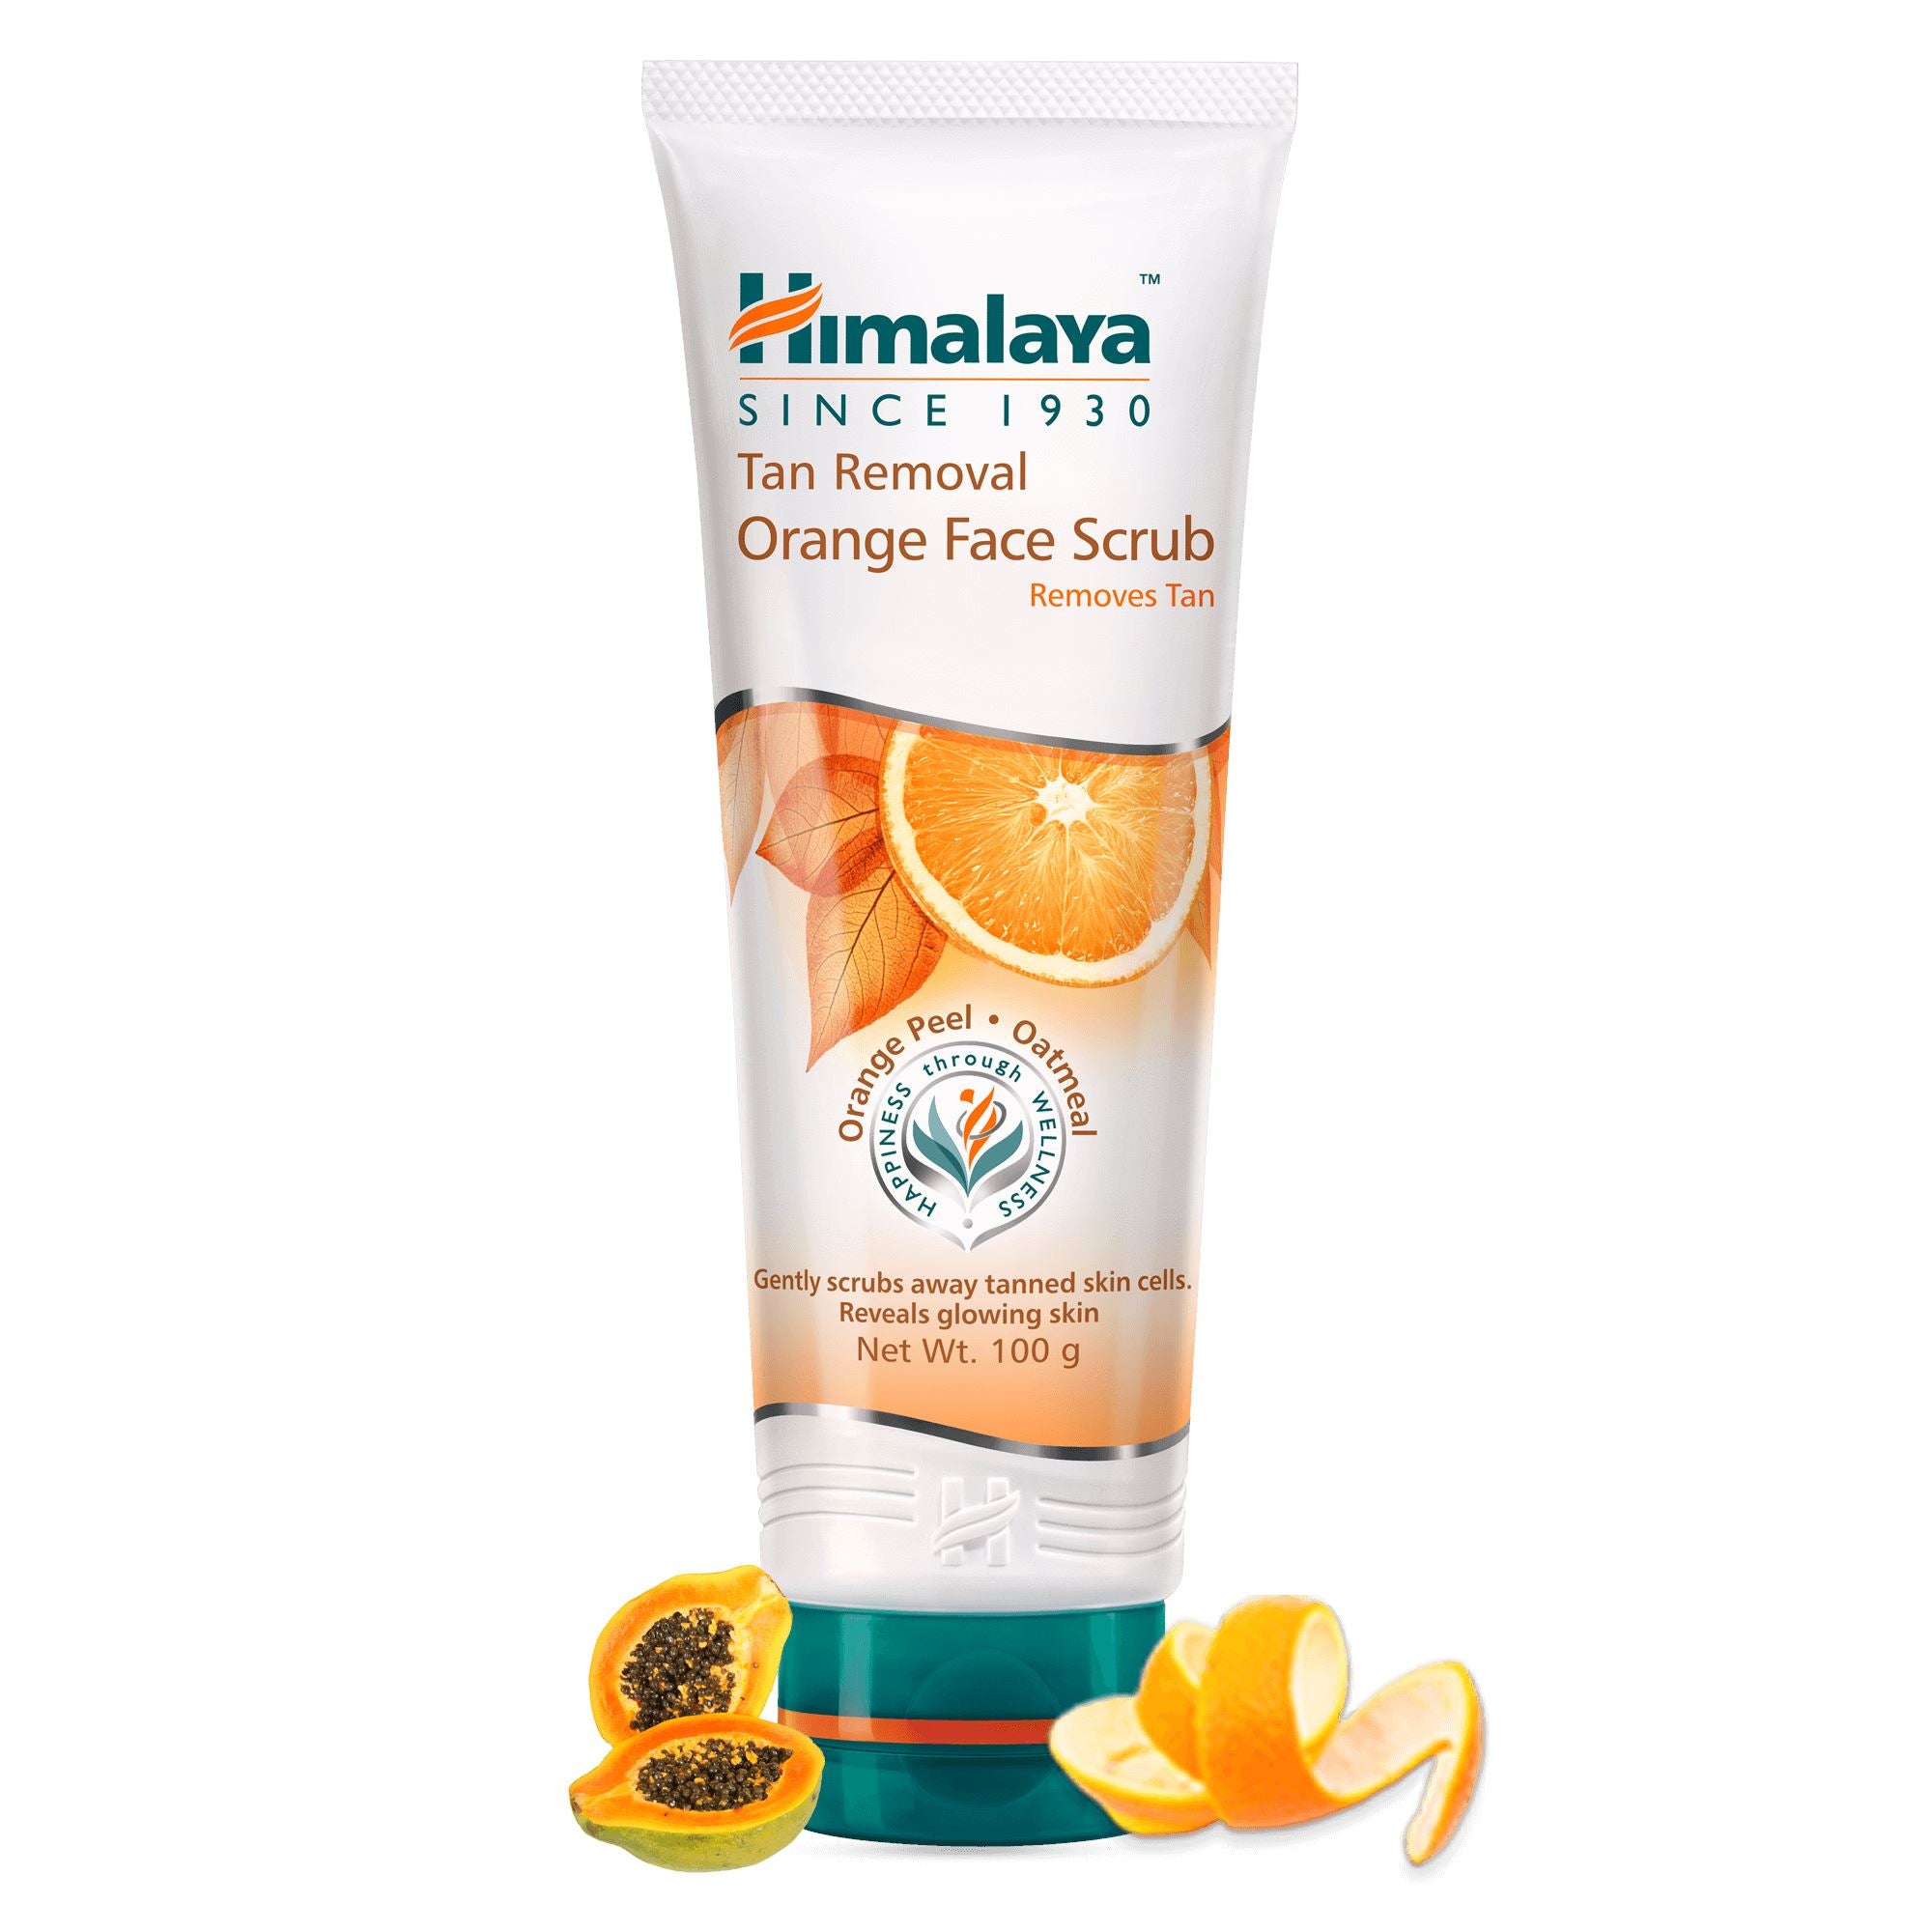 Himalaya Tan Removal Orange Face Scrub - Gently scrubs away tanned skin cells